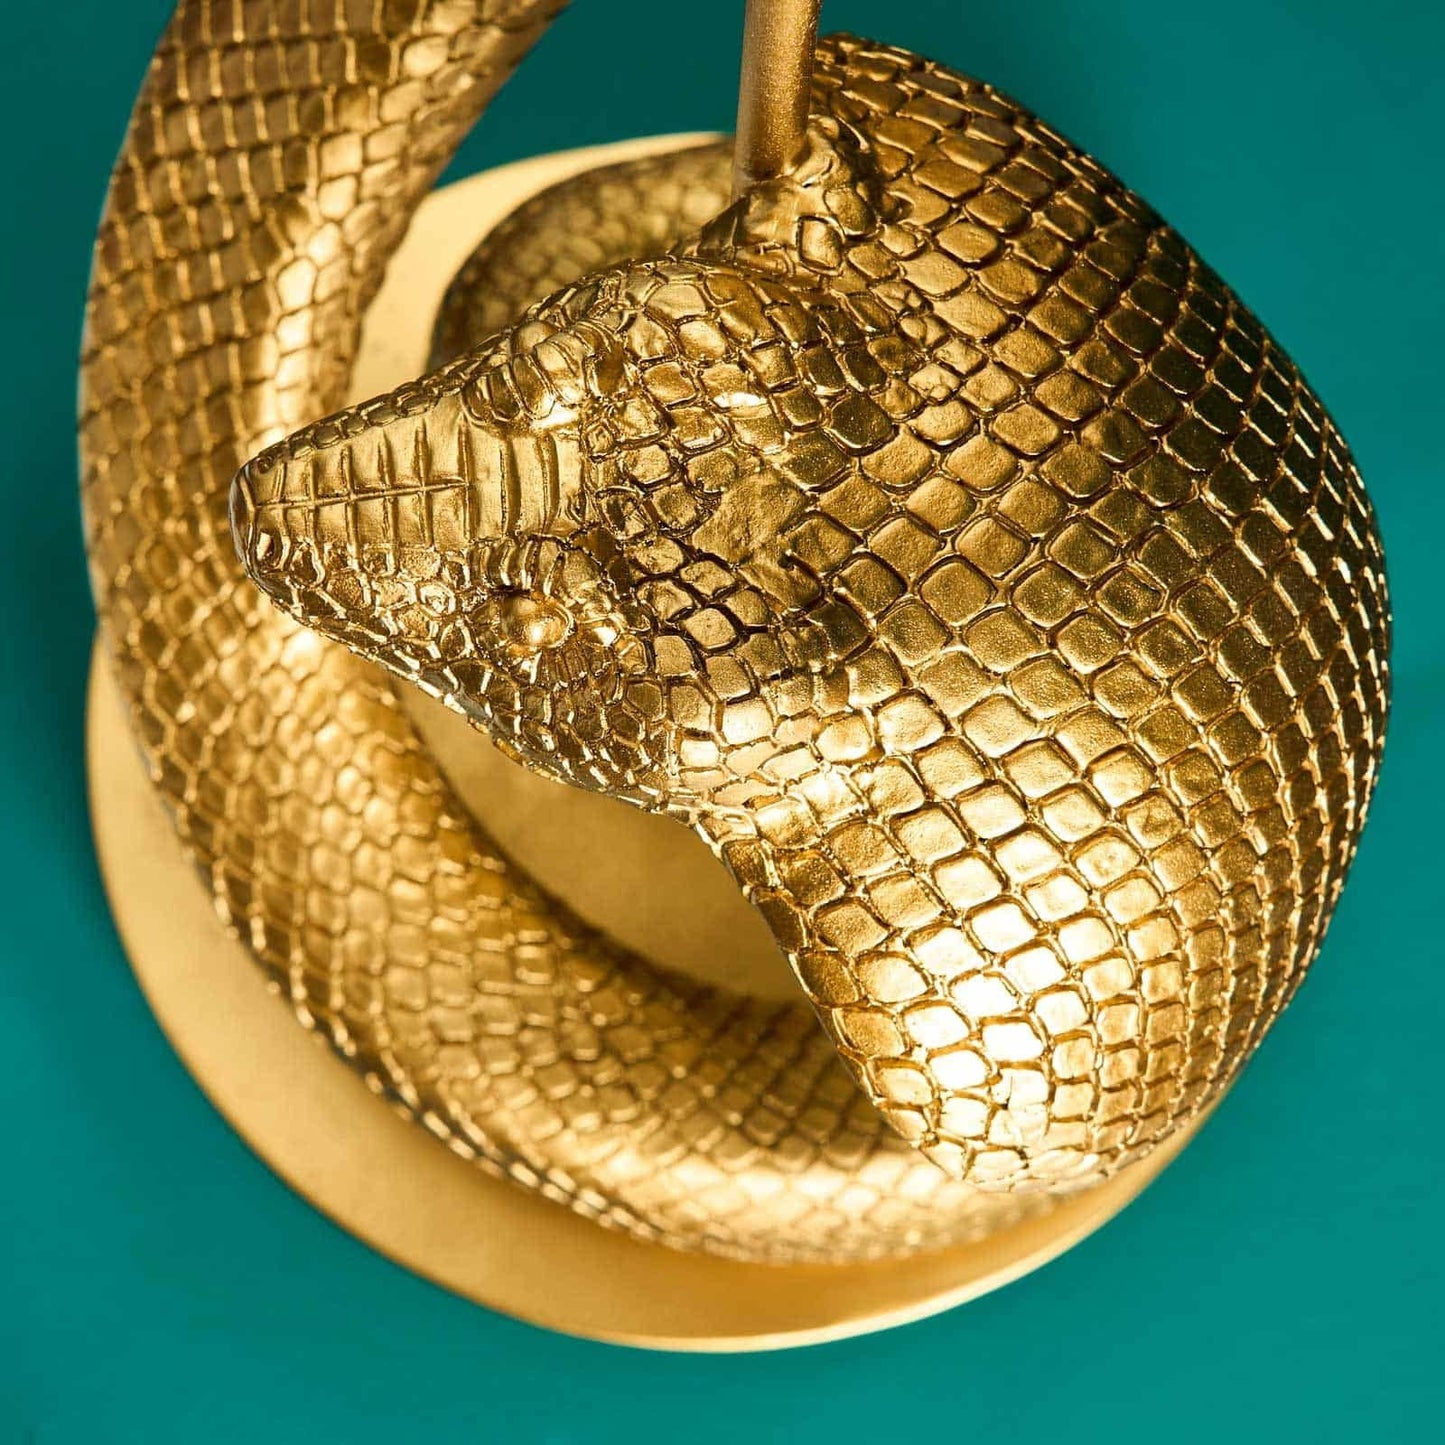 Antique Gold Snake Floor Lamp Simon - |VESIMI Design| Luxury Bathrooms and Home Decor